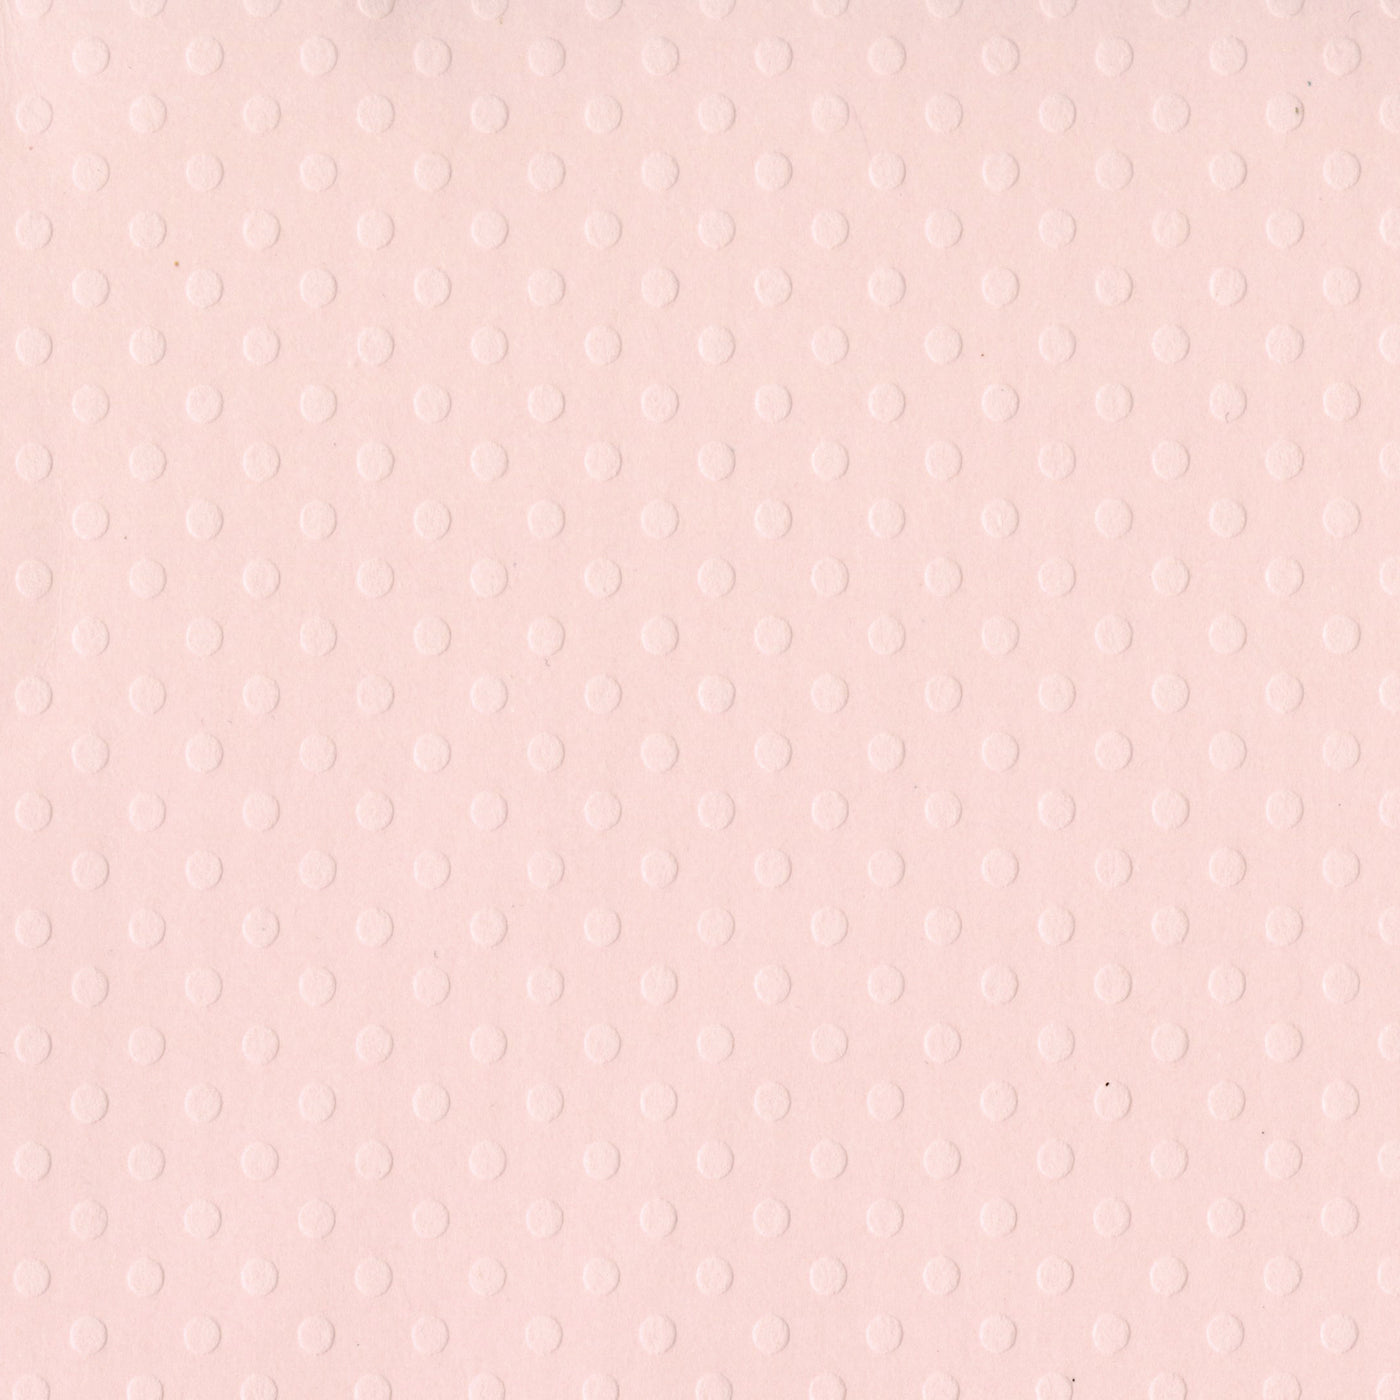 Pastel pink SOFT SHELL Dotted Swiss cardstock - 12x12 inch - embossed dot geometric pattern - Bazzill Basics